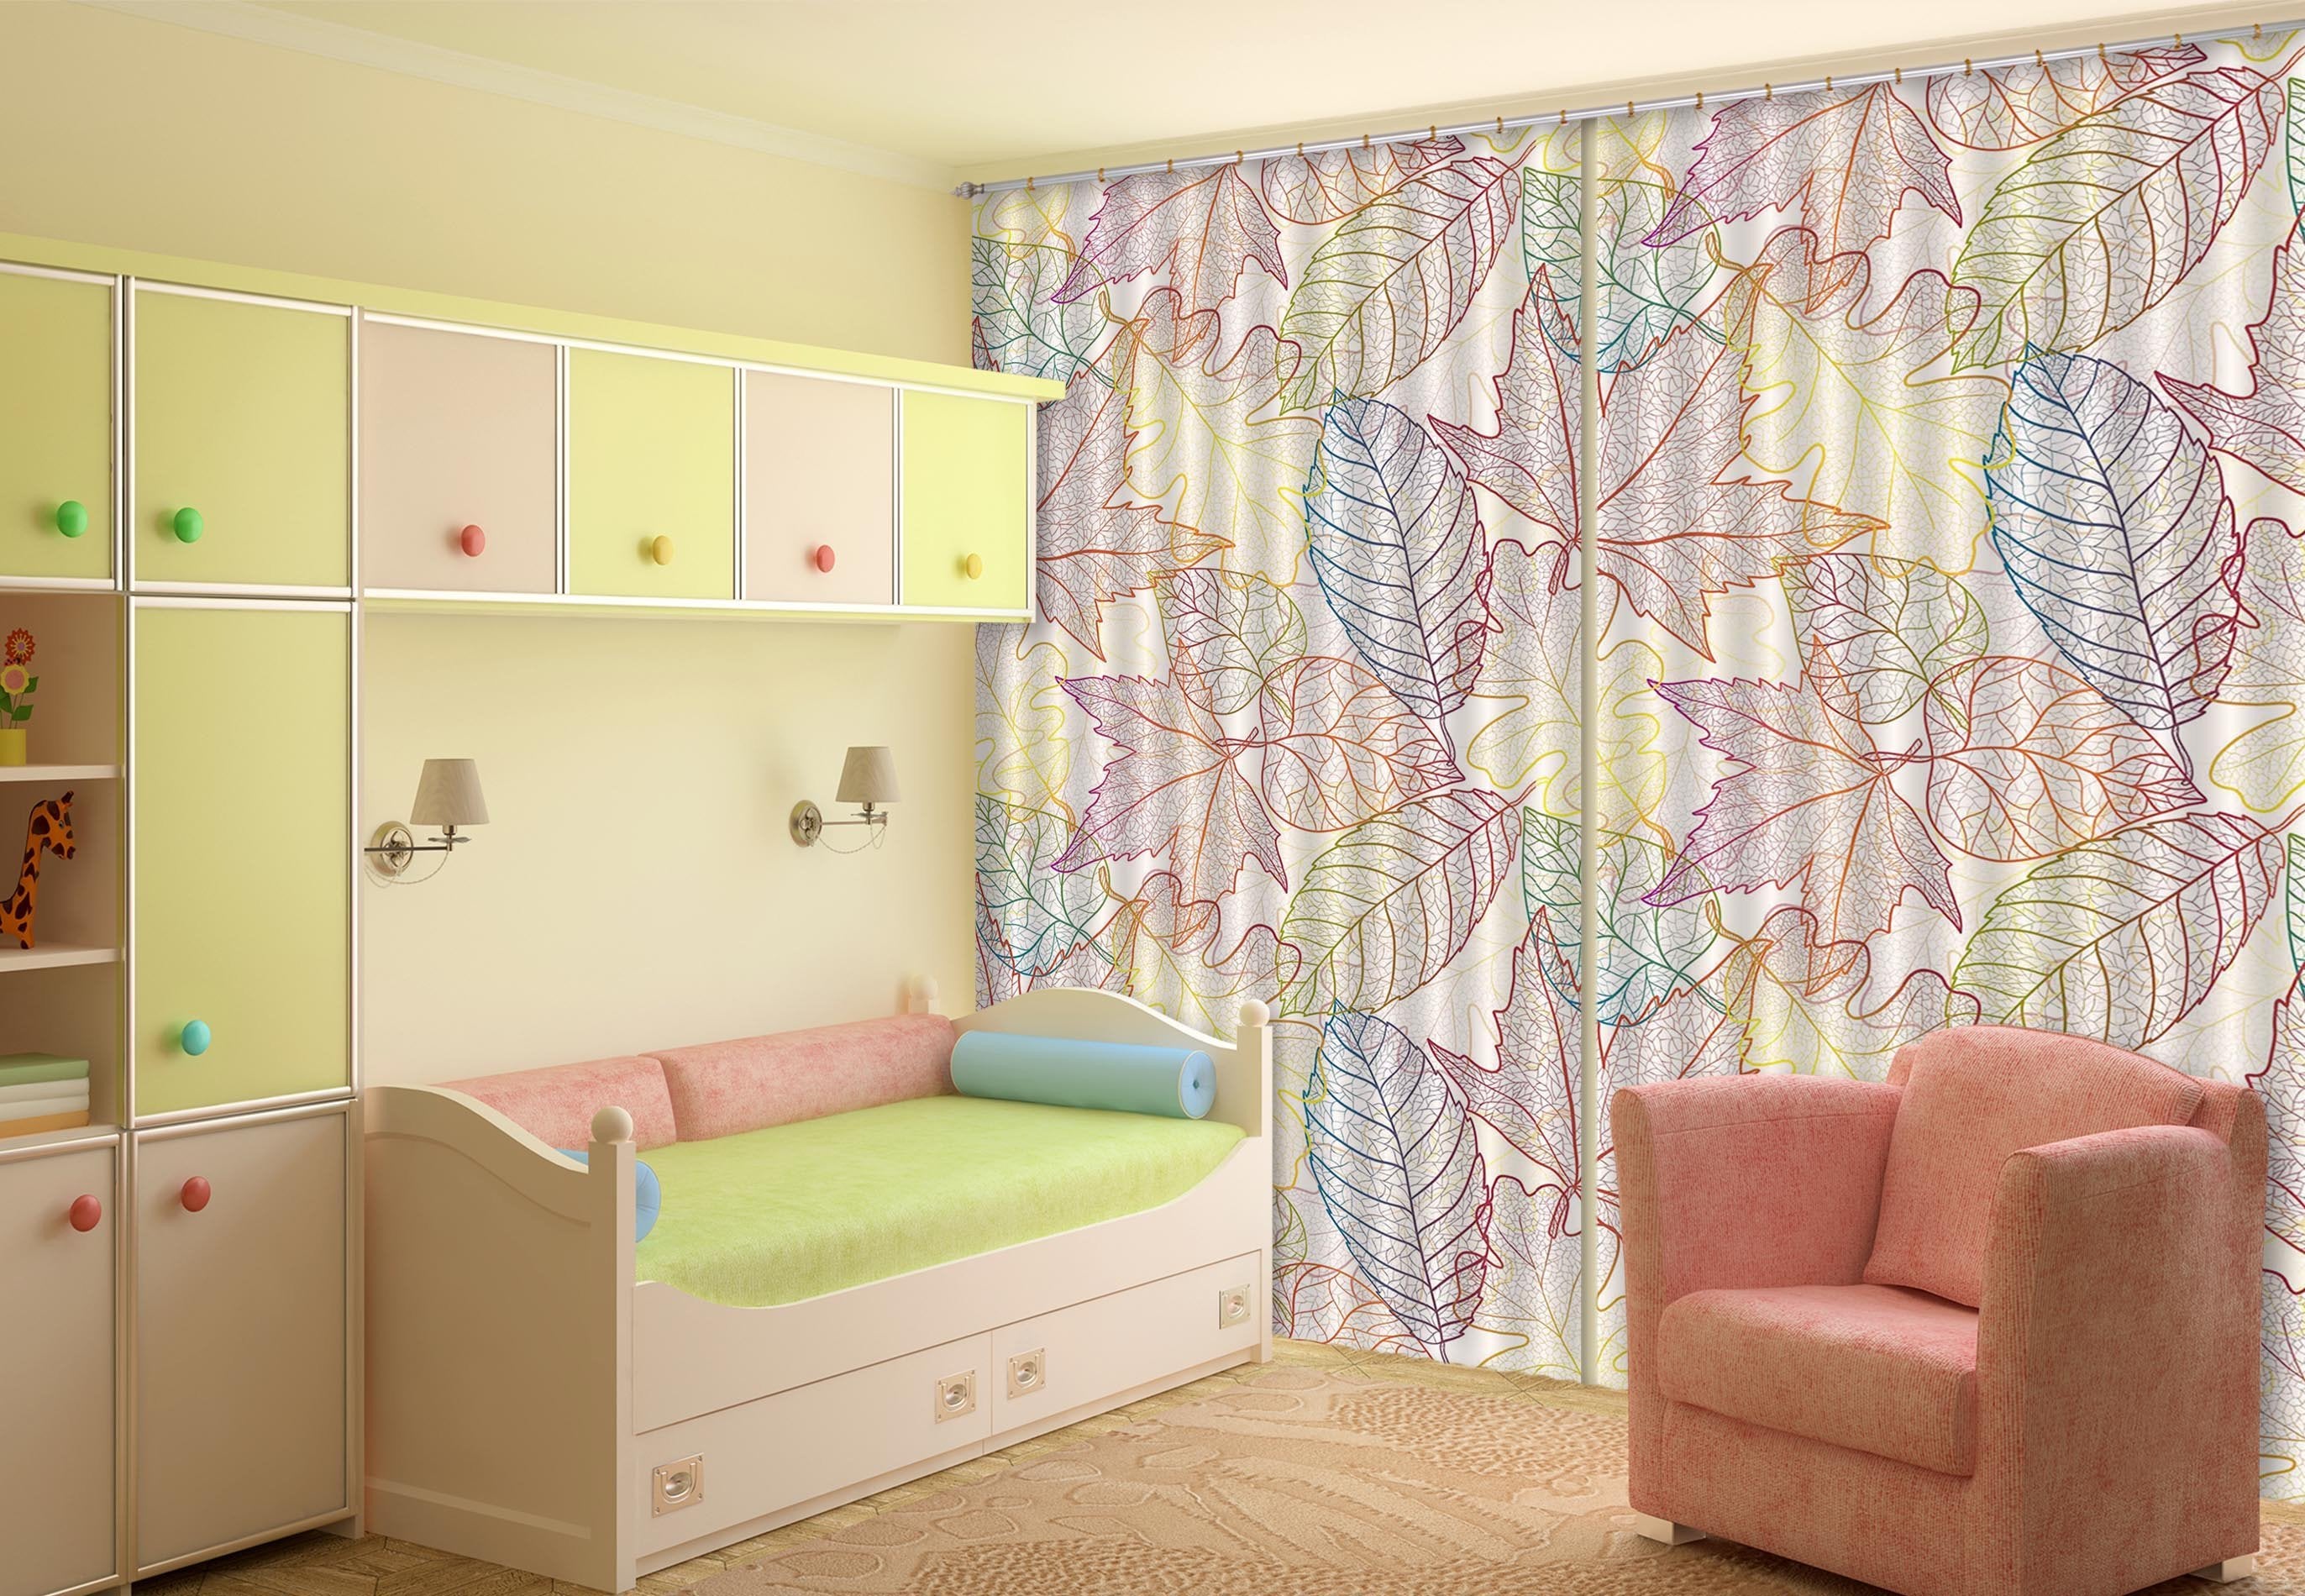 3D Leaves Veins Pattern 657 Curtains Drapes Wallpaper AJ Wallpaper 